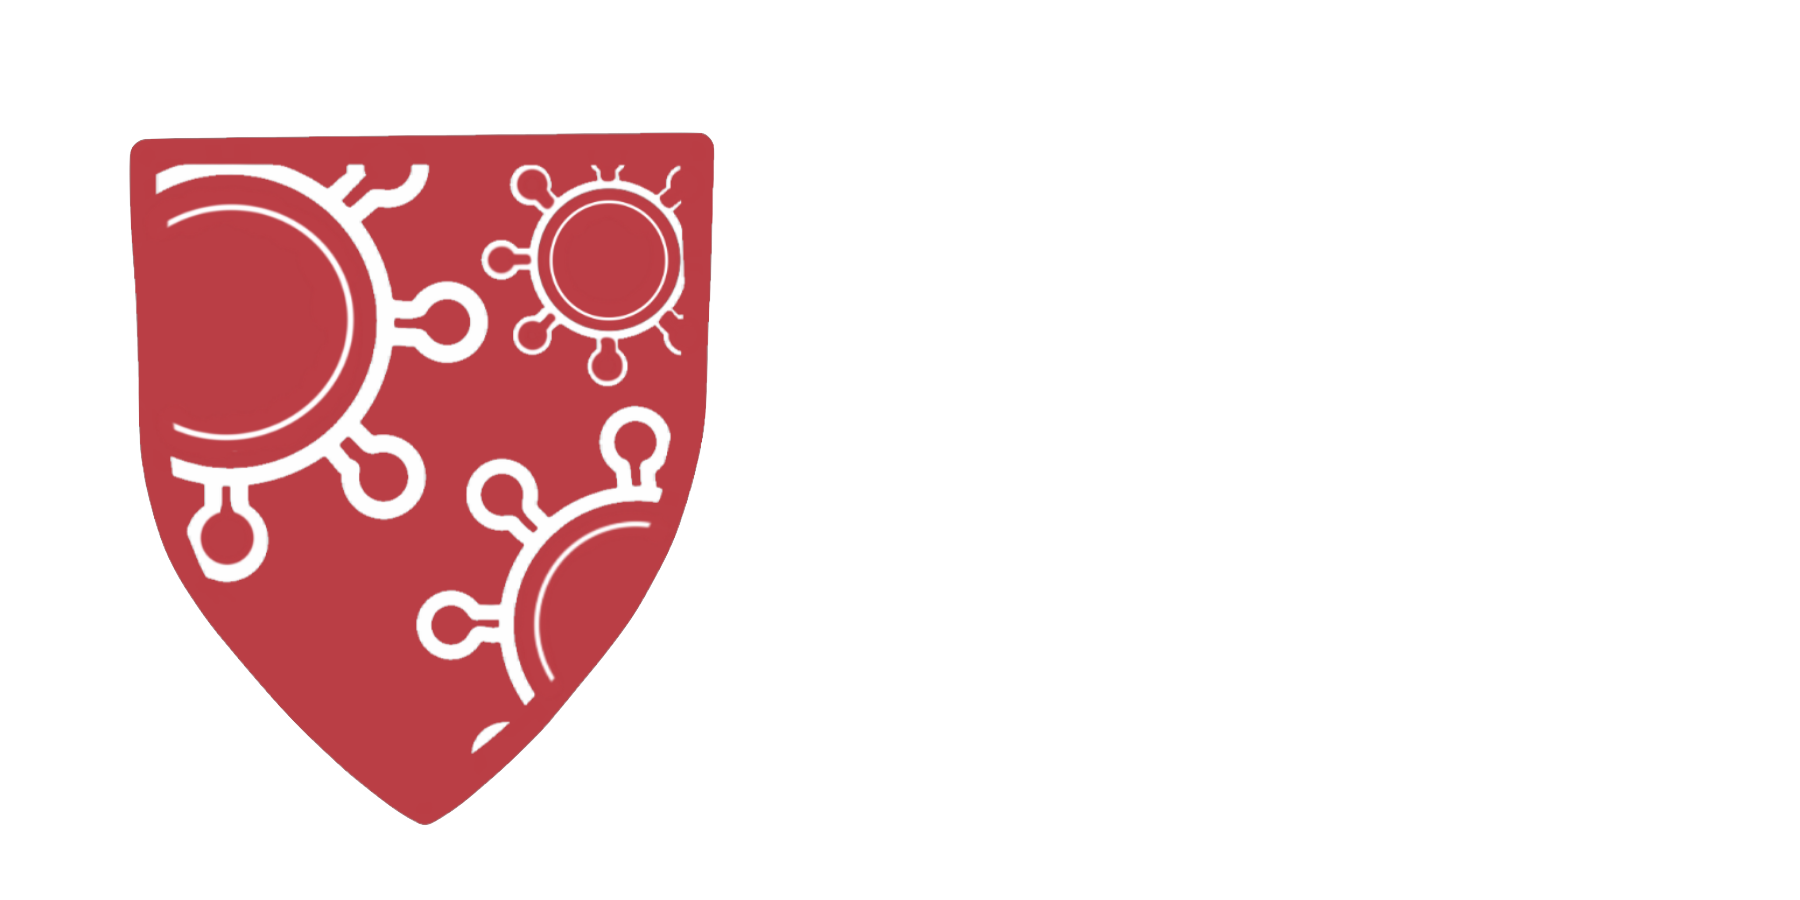 COVID-19 Student Response